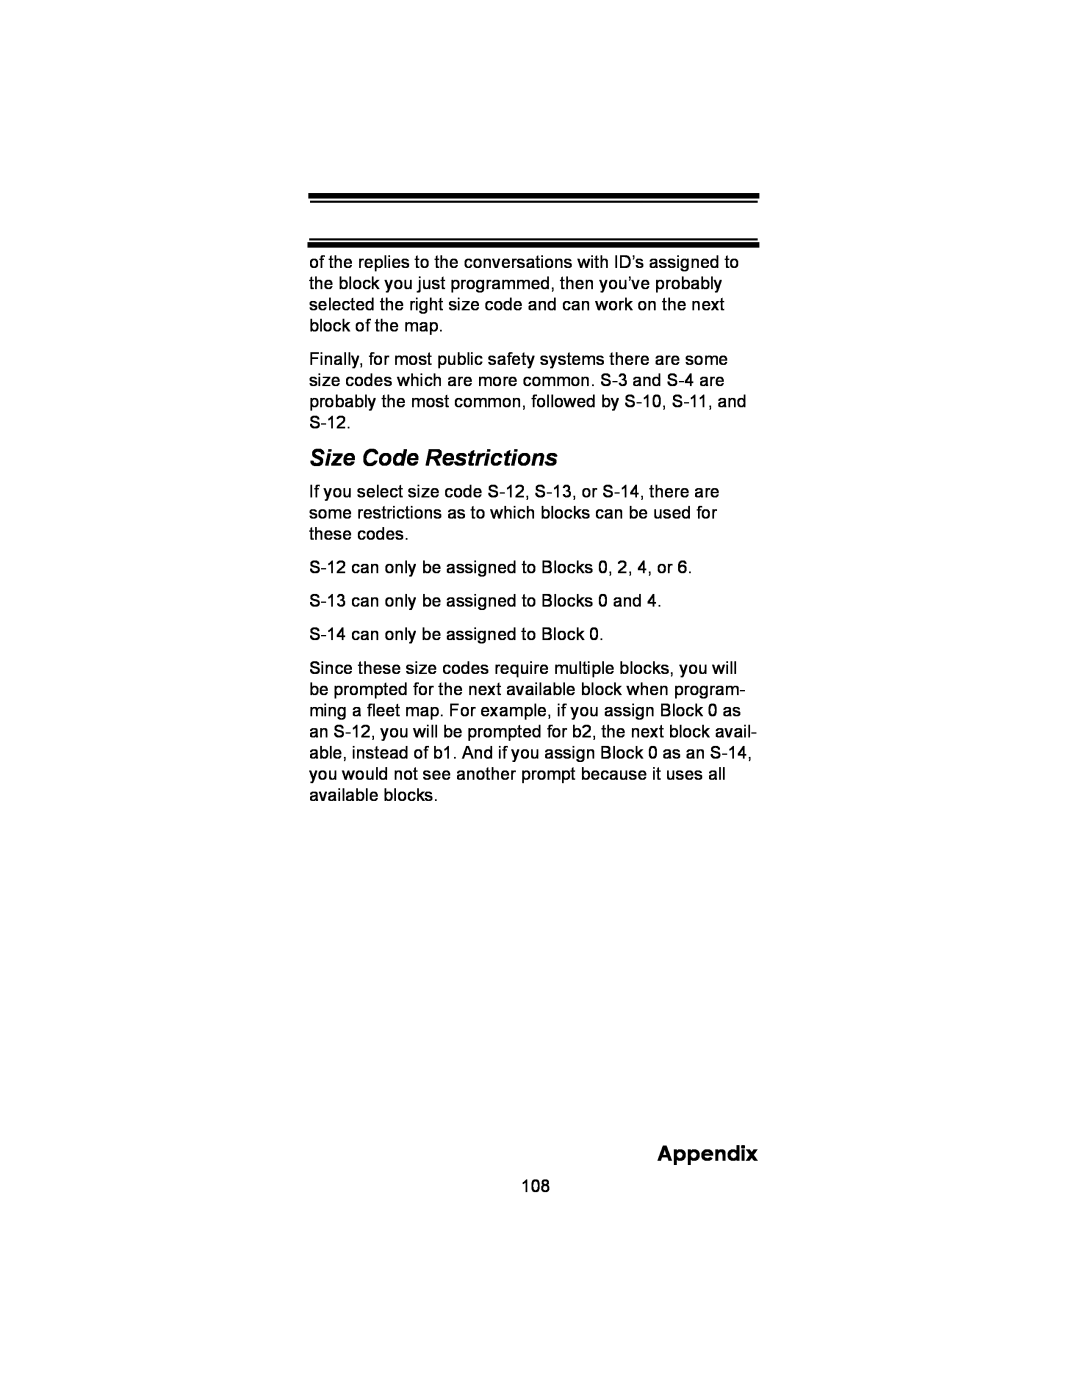 Uniden BC246T owner manual Size Code Restrictions, Appendix 